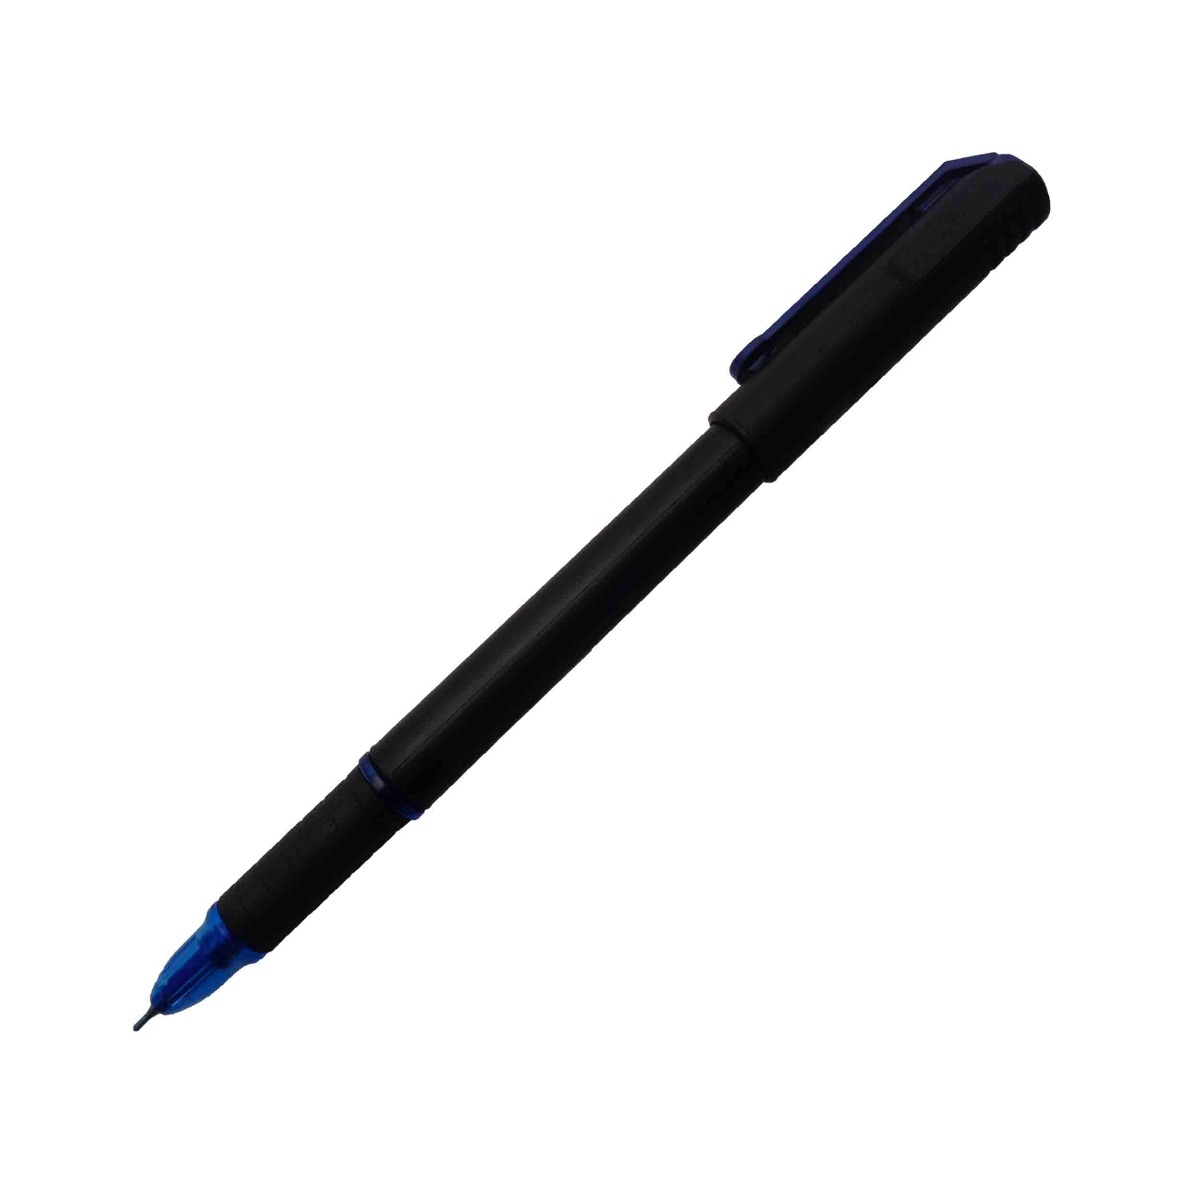 Classmate octane Model: 15426 Black color body with blue ink fine tip cap type gel pen